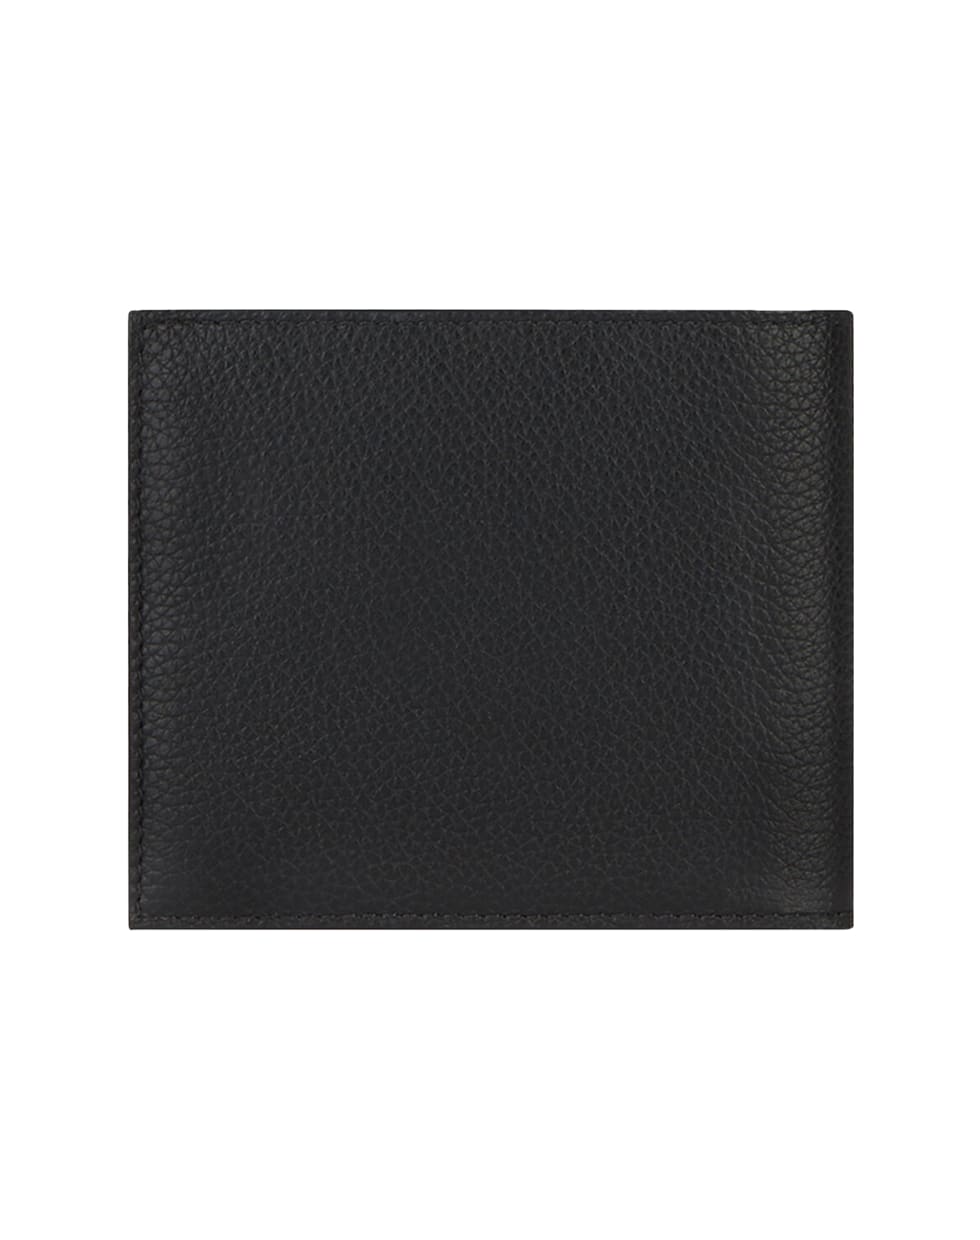 Givenchy 8cc Billfold Wallet - Black